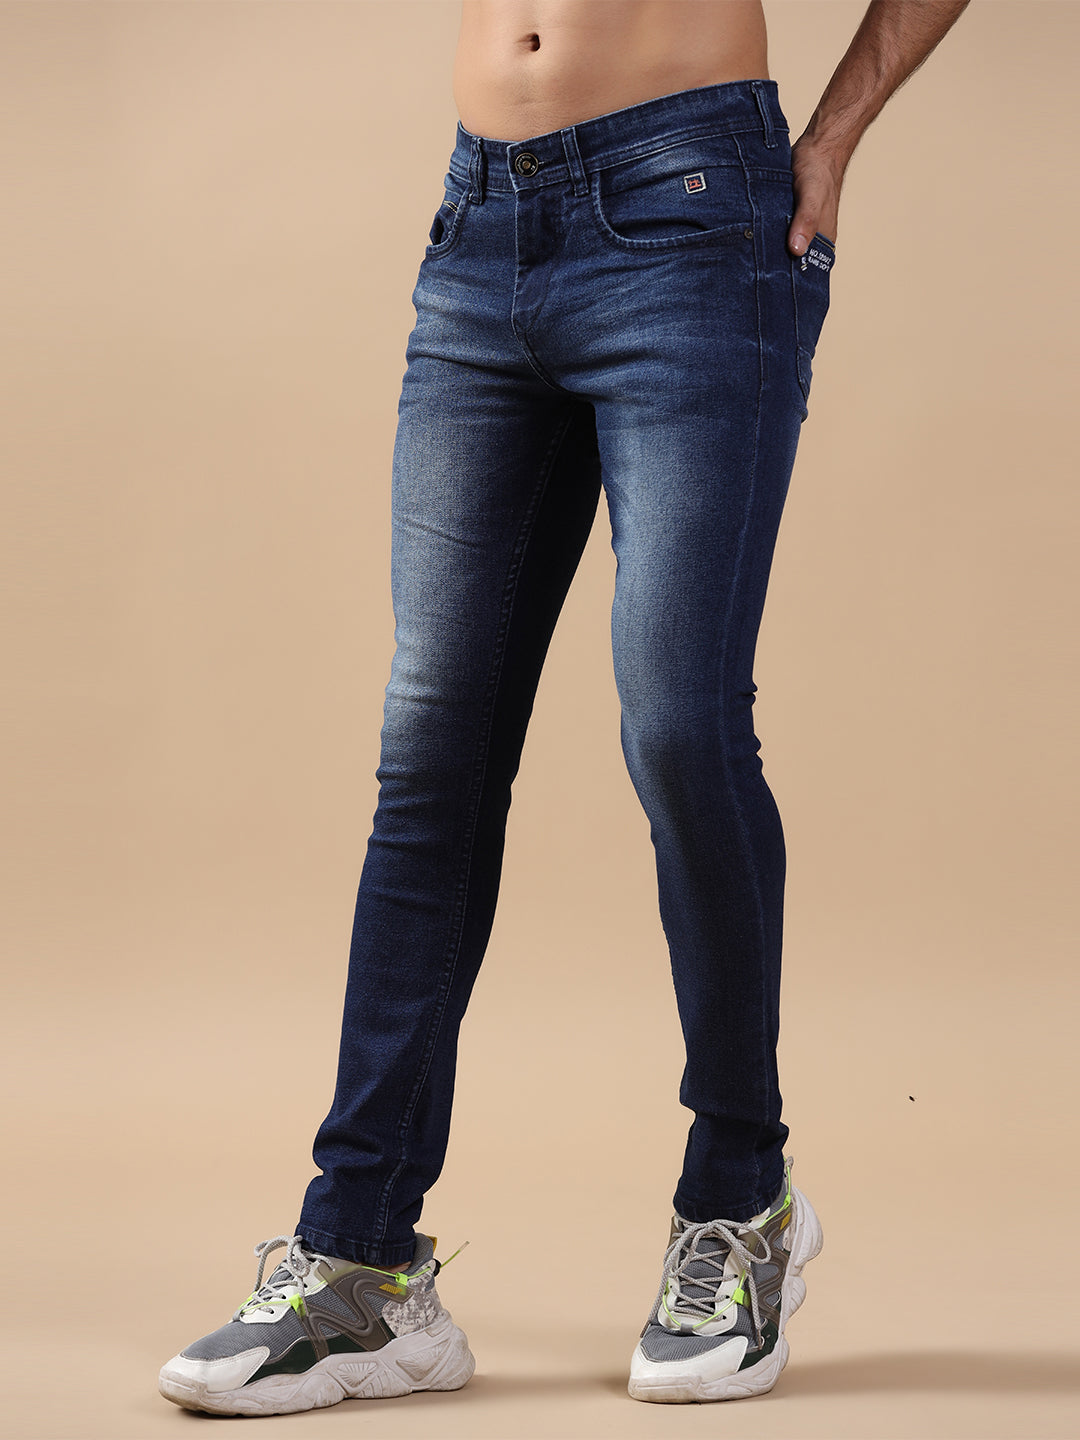 Seluar Jeans leaki Jeans for Men new style Jean pants straight cut jeans  Slim Straight Jeans Seluar jeans Blue Black Casual denim Pant | Lazada